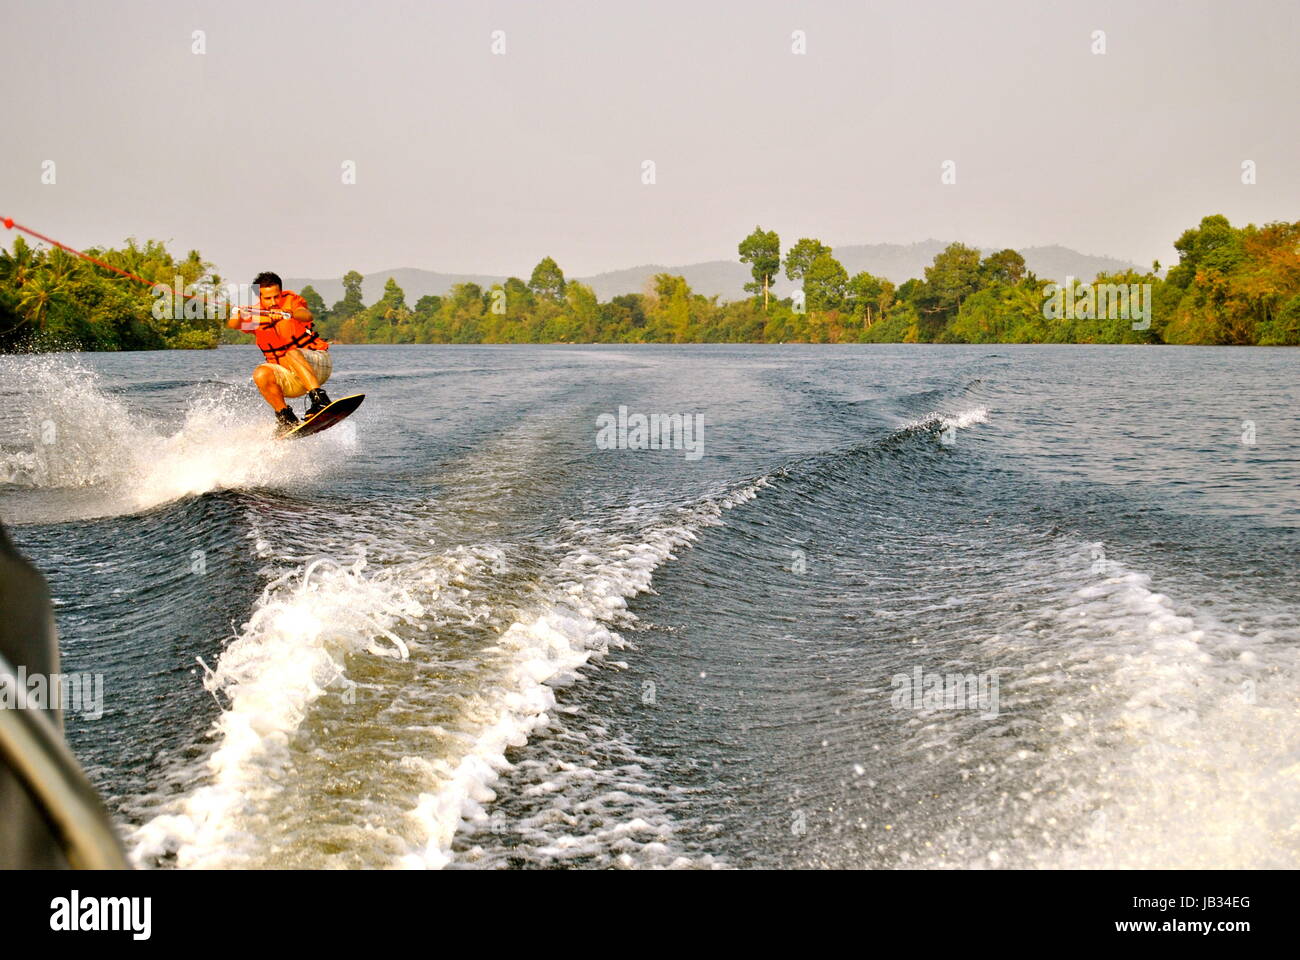 Man wakeboarding, Teuk Chhu, Kampot, Cambodia Stock Photo